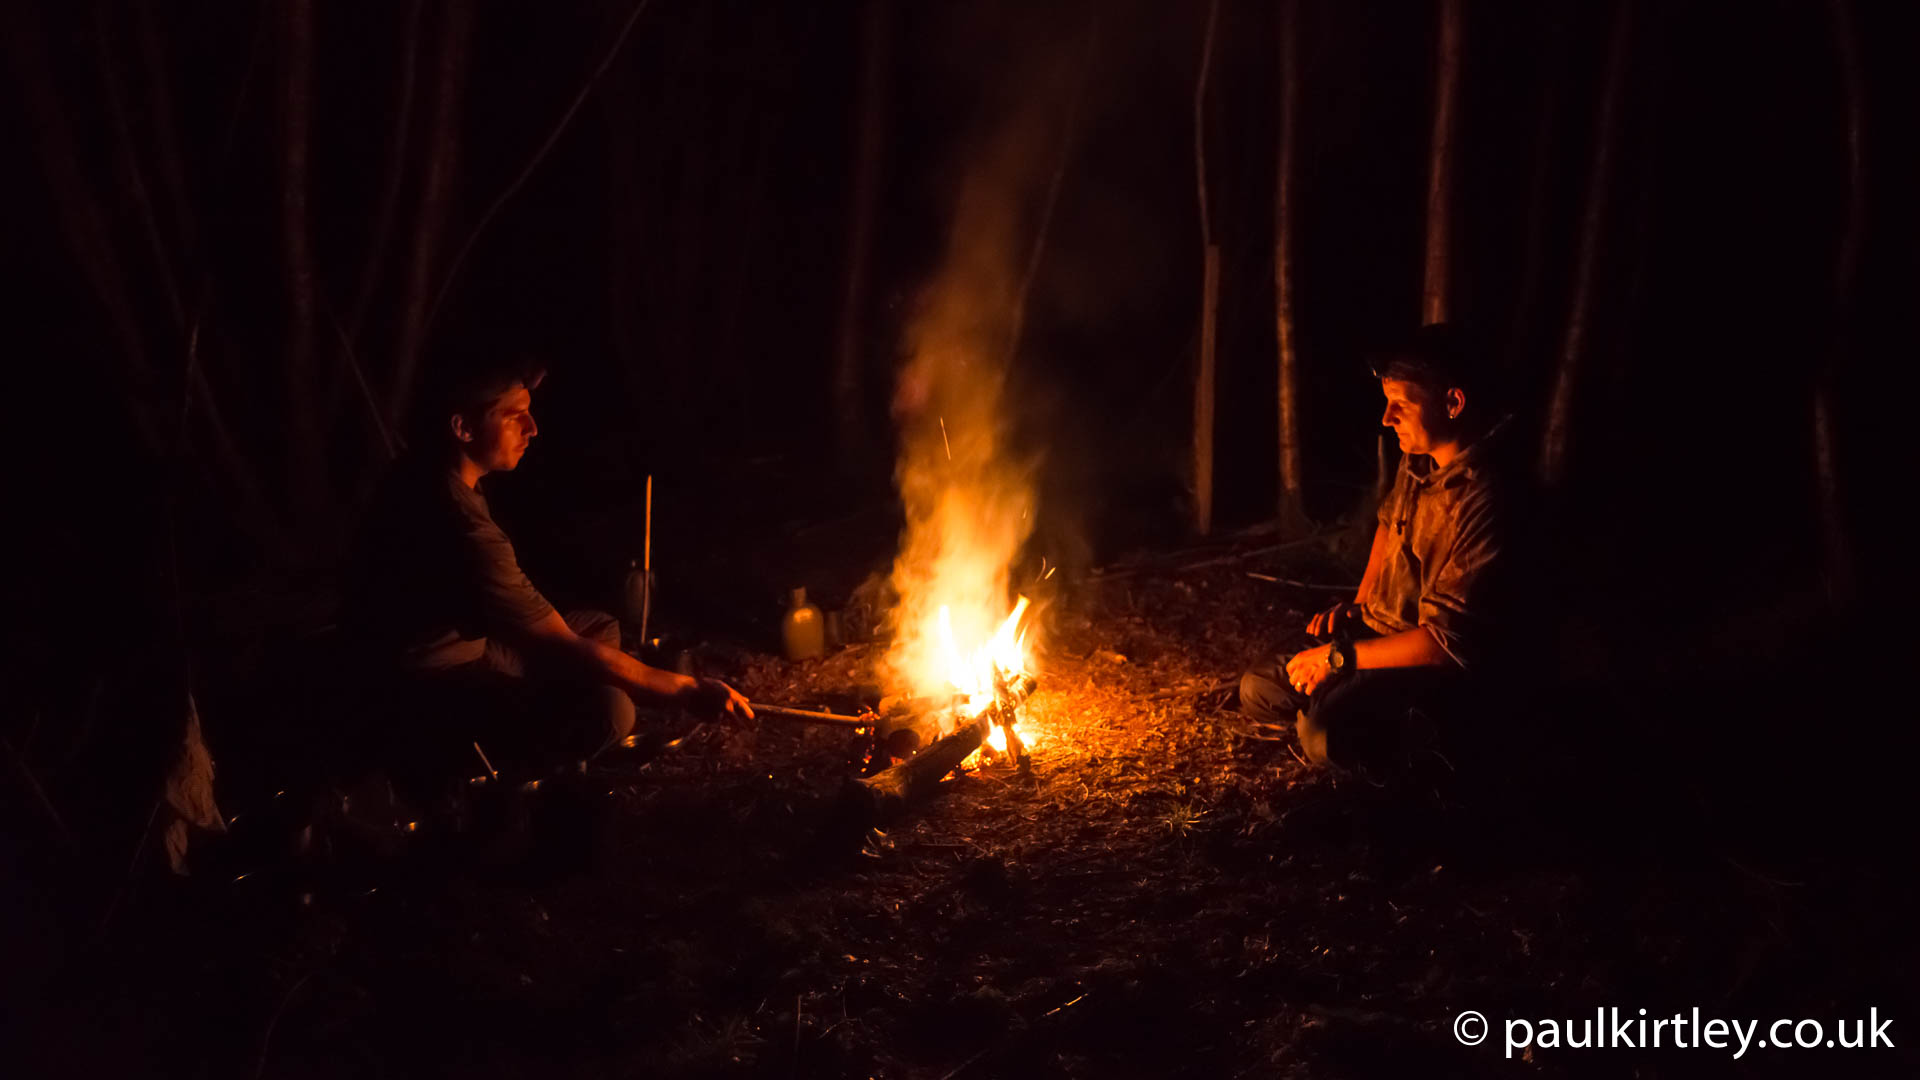 A nighttime campfire scene